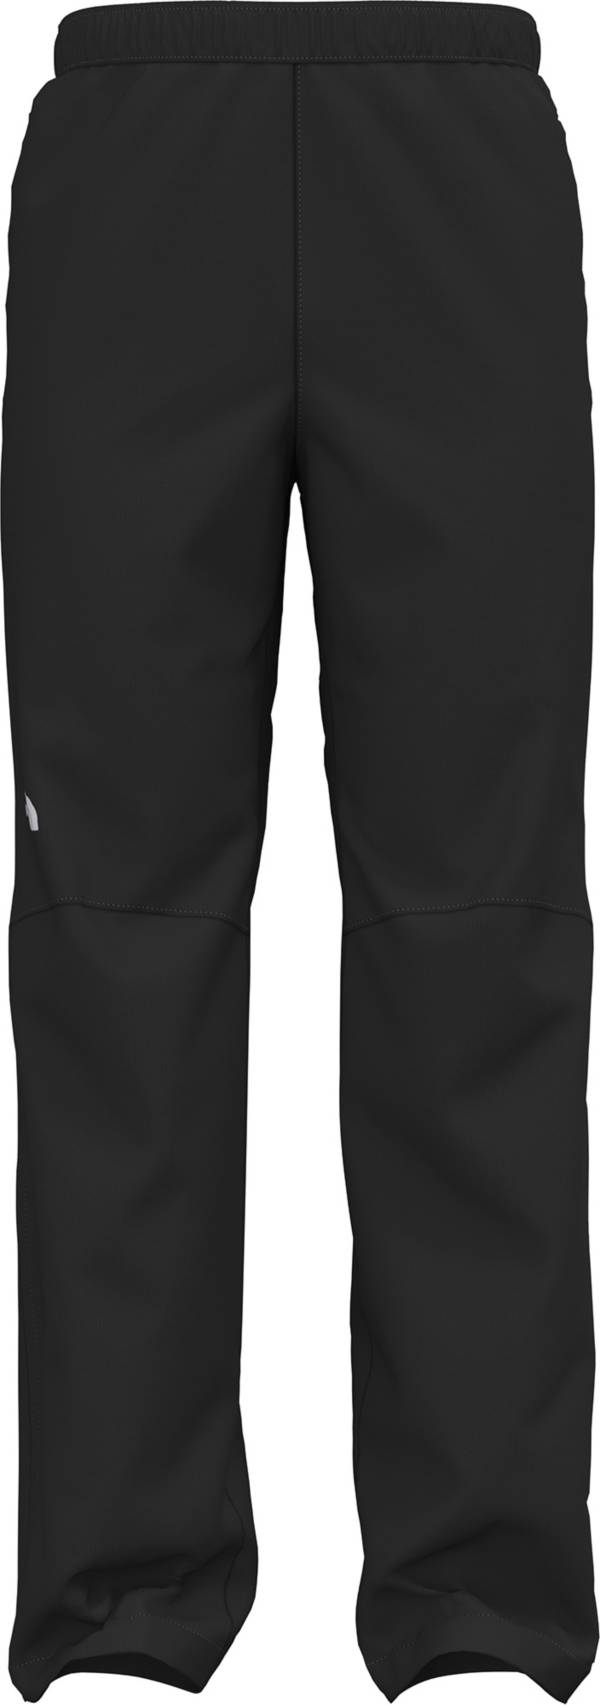 The North Face Men's Venture 2 Half Zip Pants product image